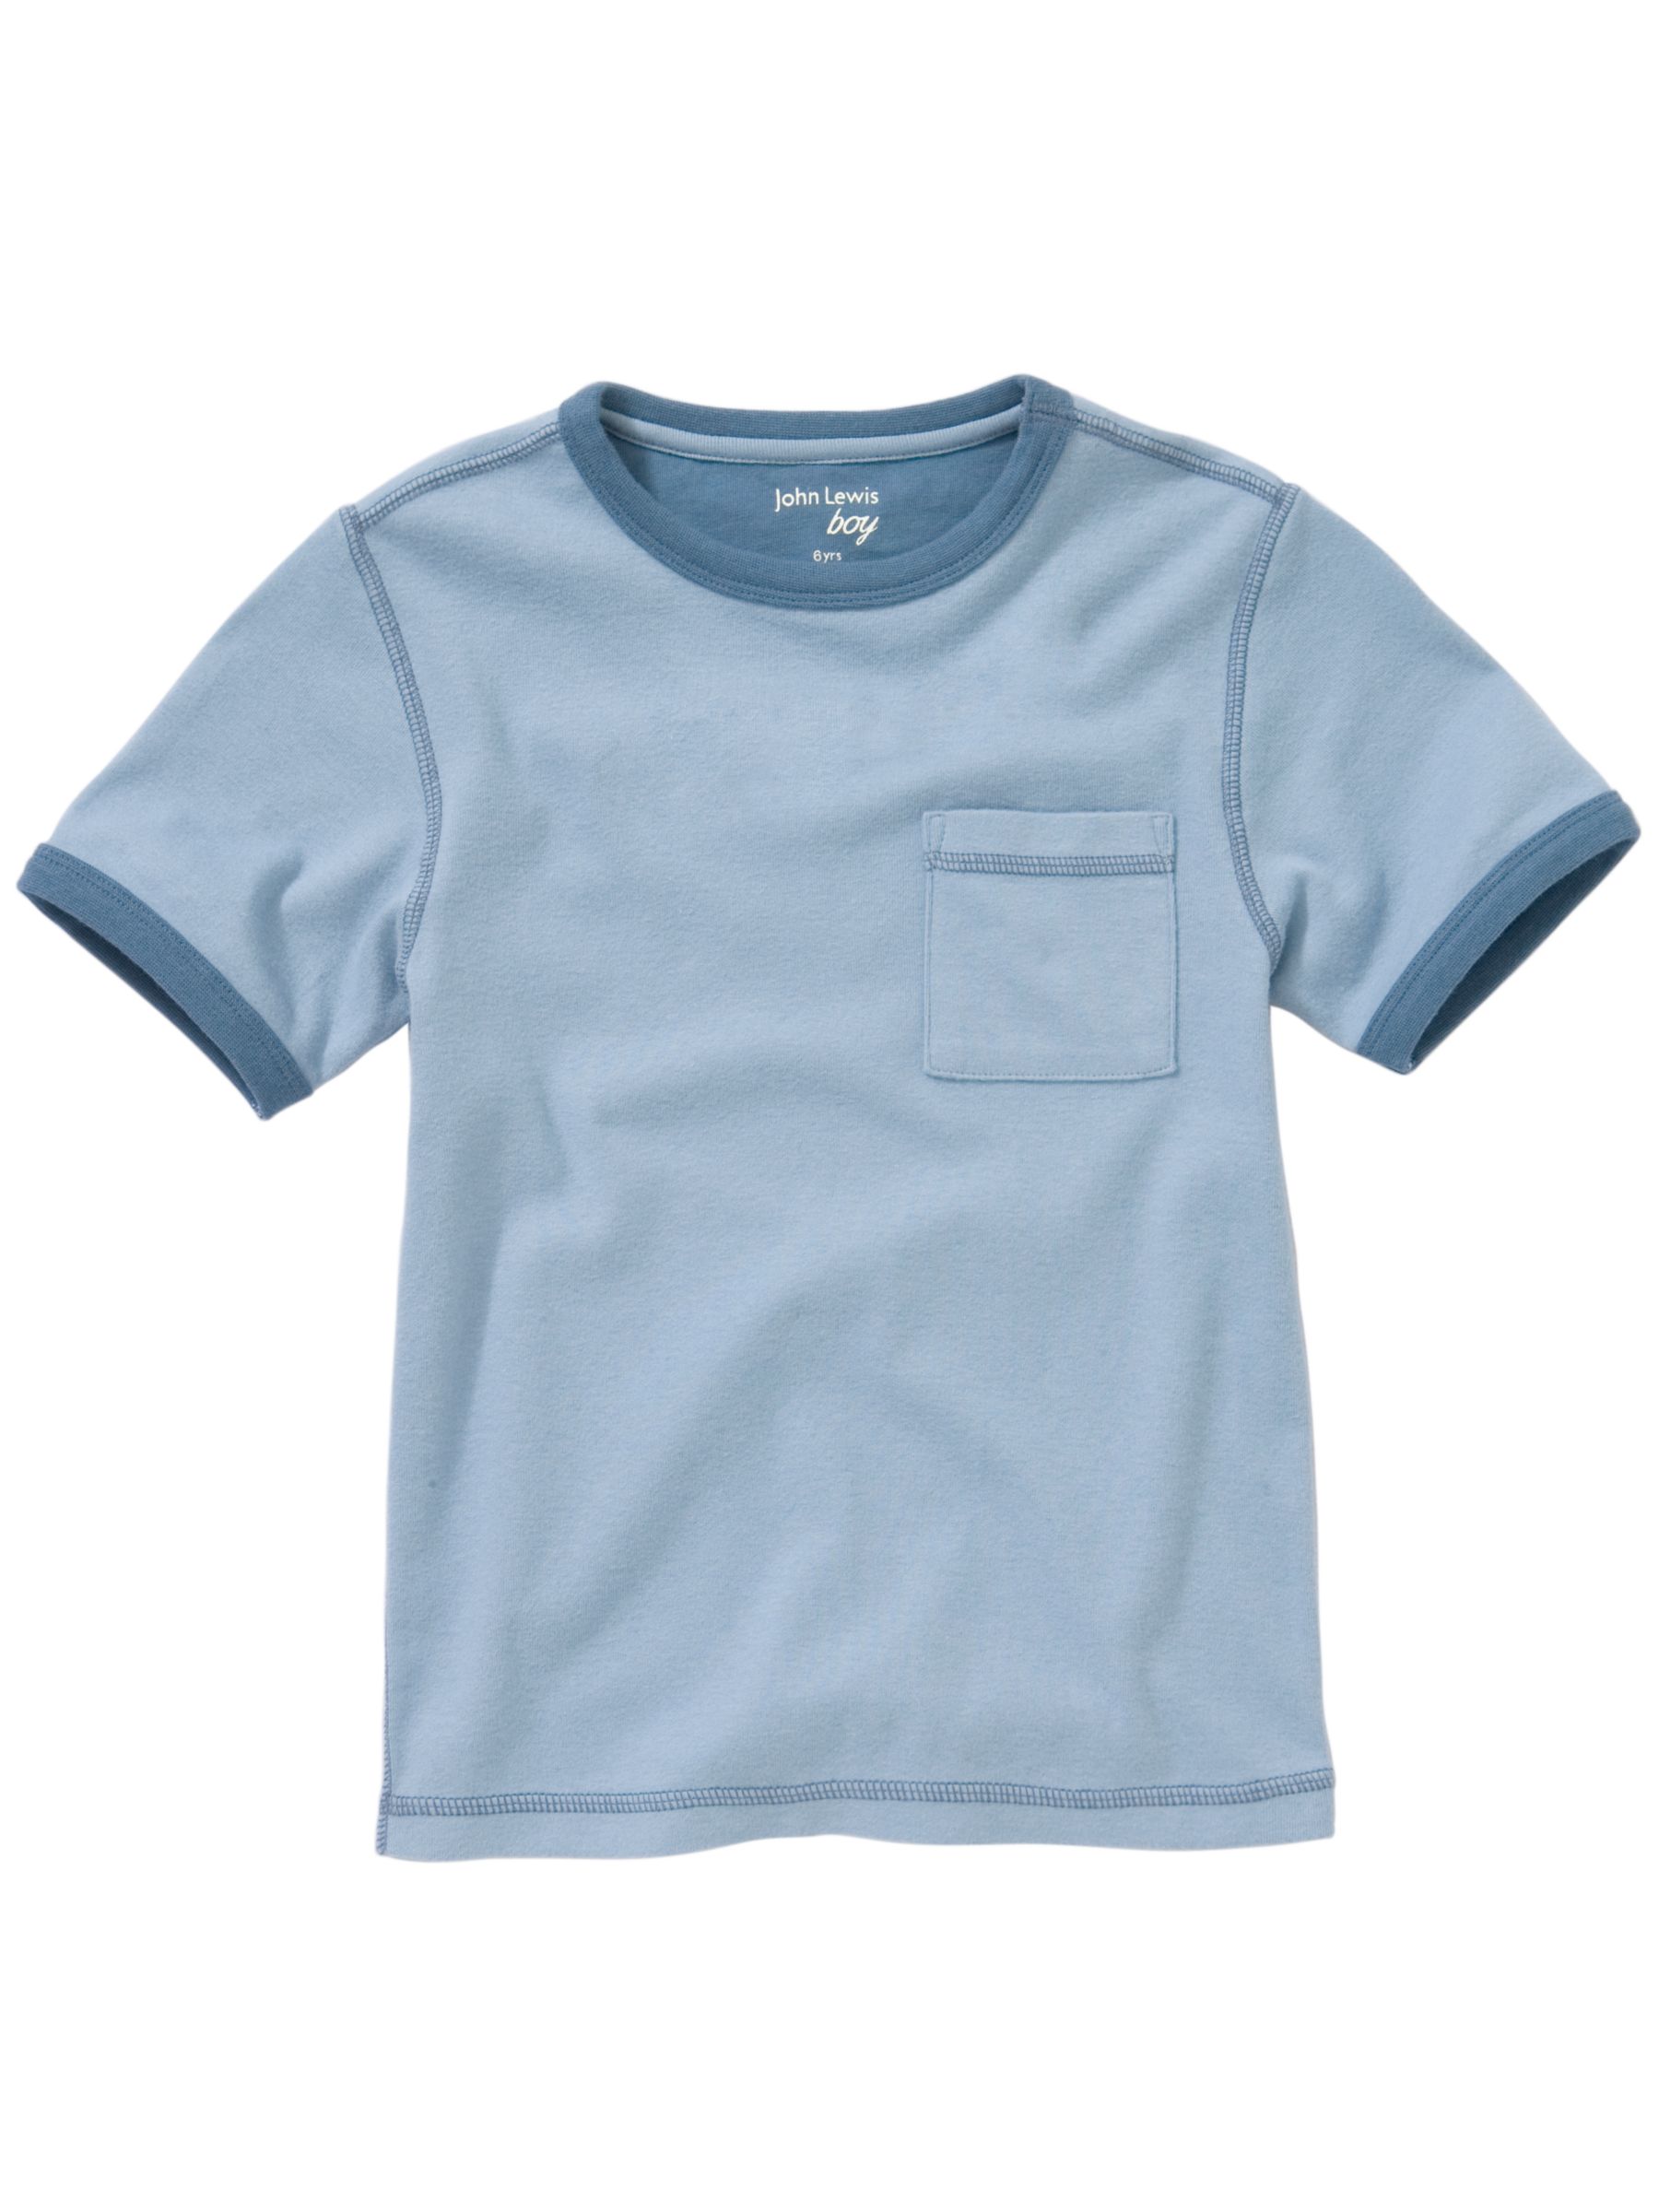 John Lewis Boy Short Sleeve T-Shirt, Blue, 12